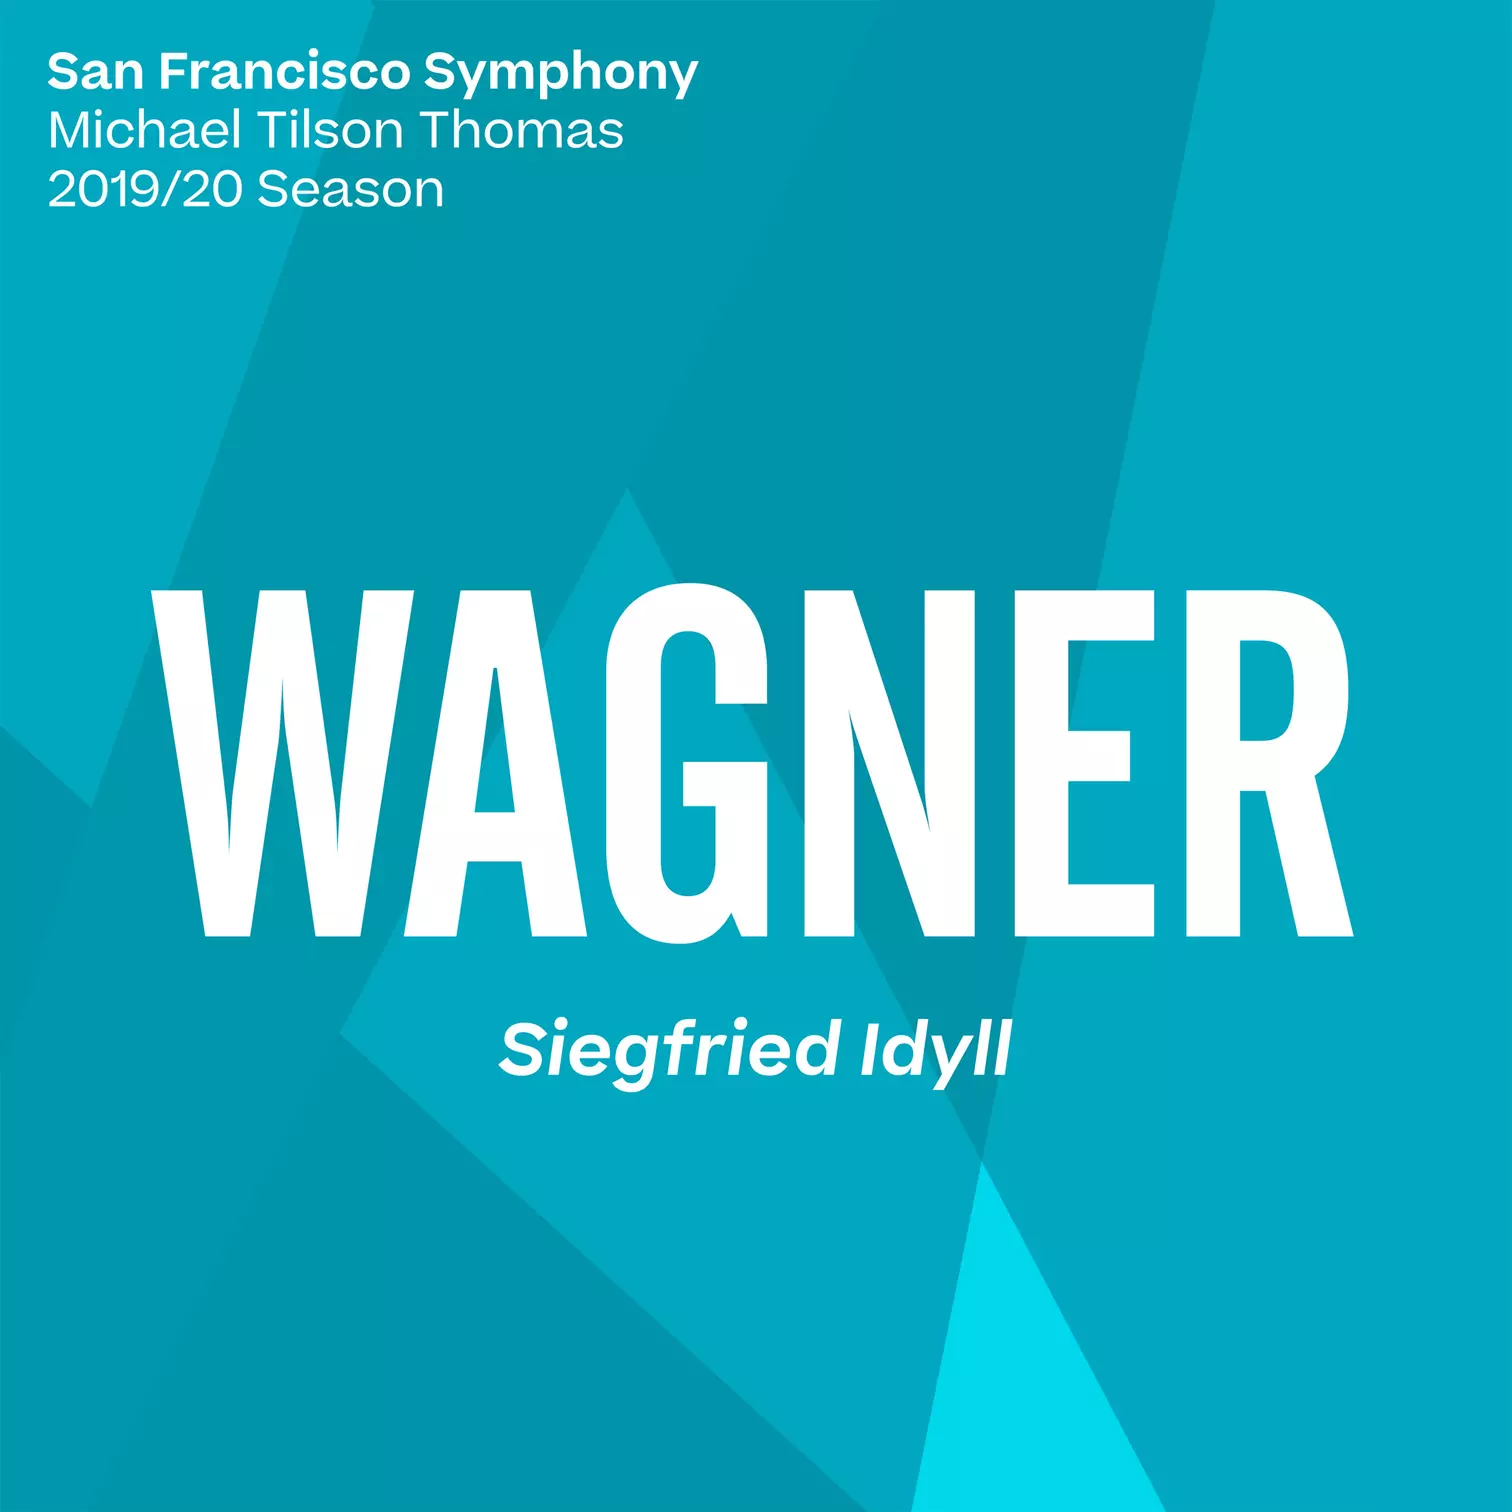 Wagner: Siegfried Idyll 